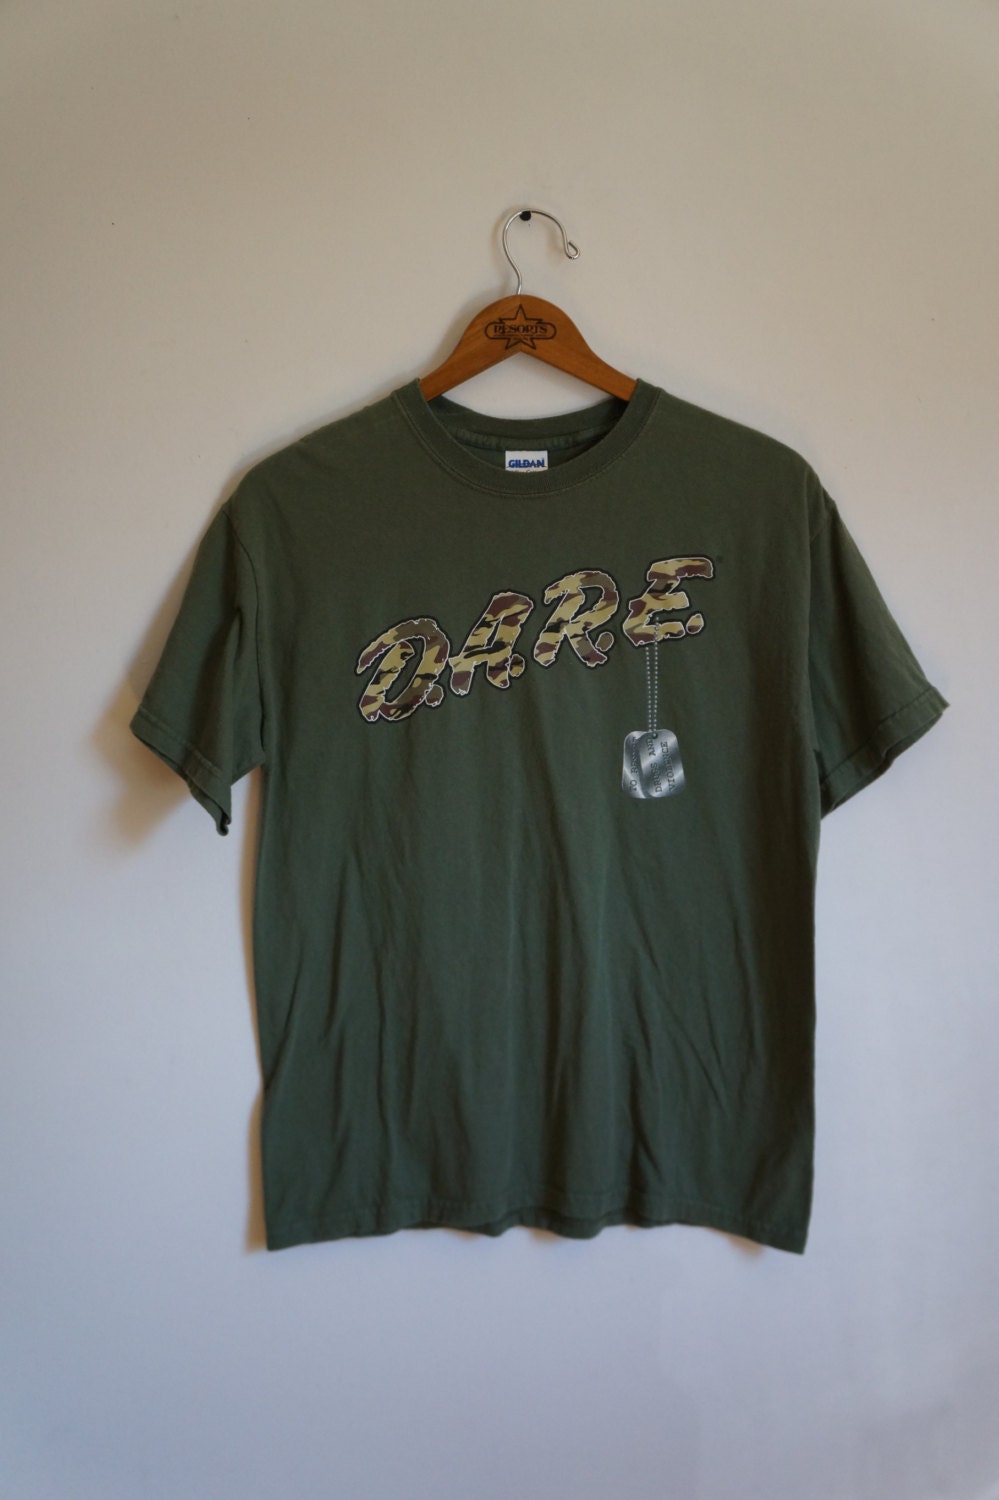 Vintage 90s Dare Shirt Dare Shirt 90s t-shirt grunge shirt